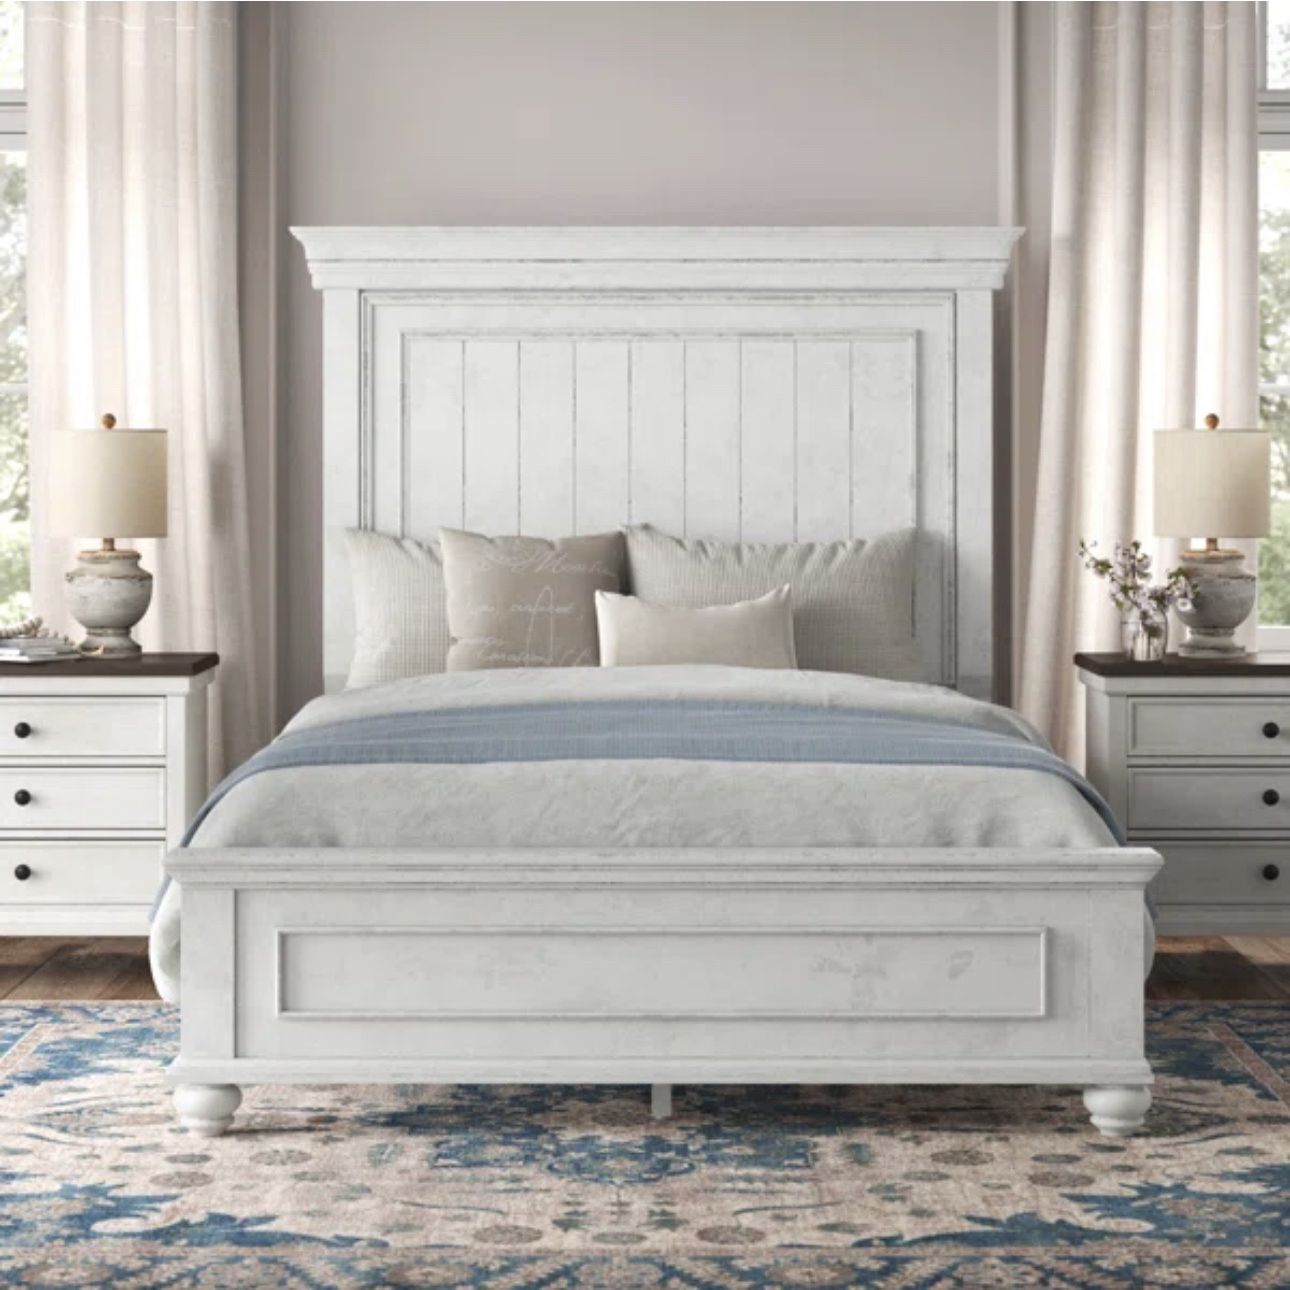 Brand New White King Bed